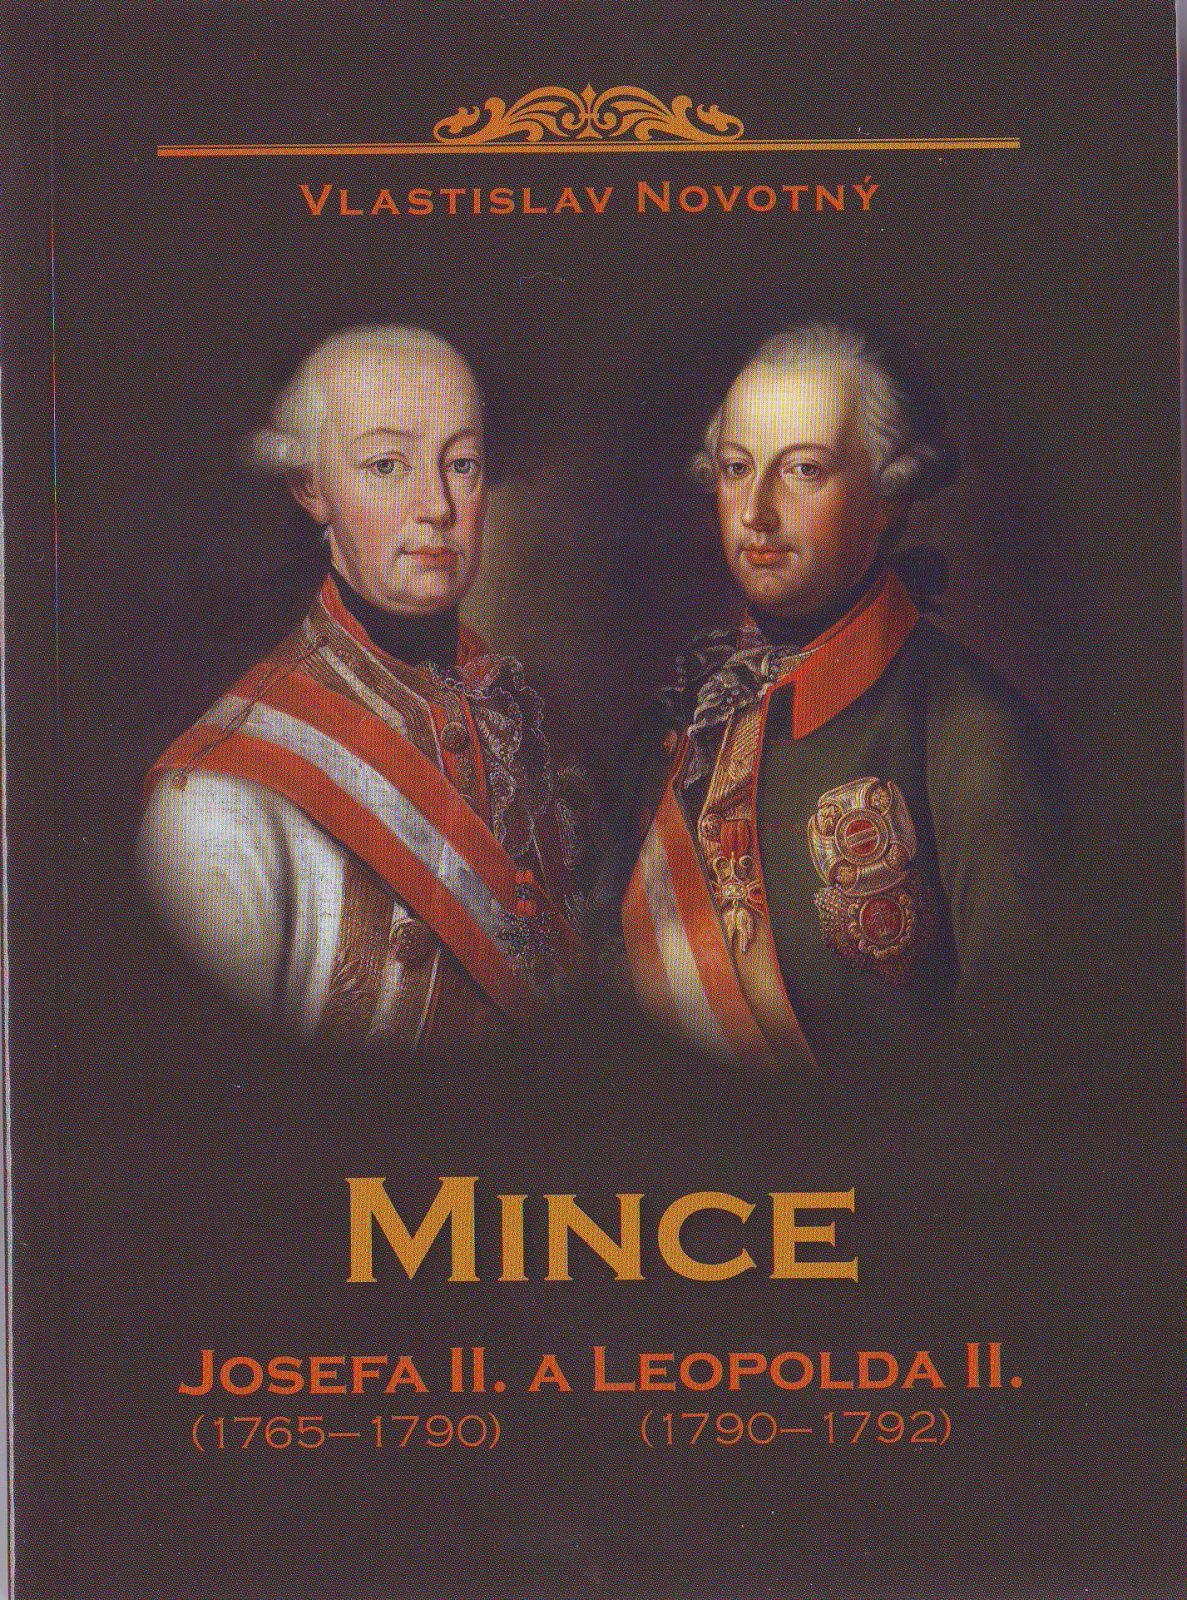 KATALOG MINCÍ JOSEF II. 1765-1790 a LEOPOLD II. 1790-1792